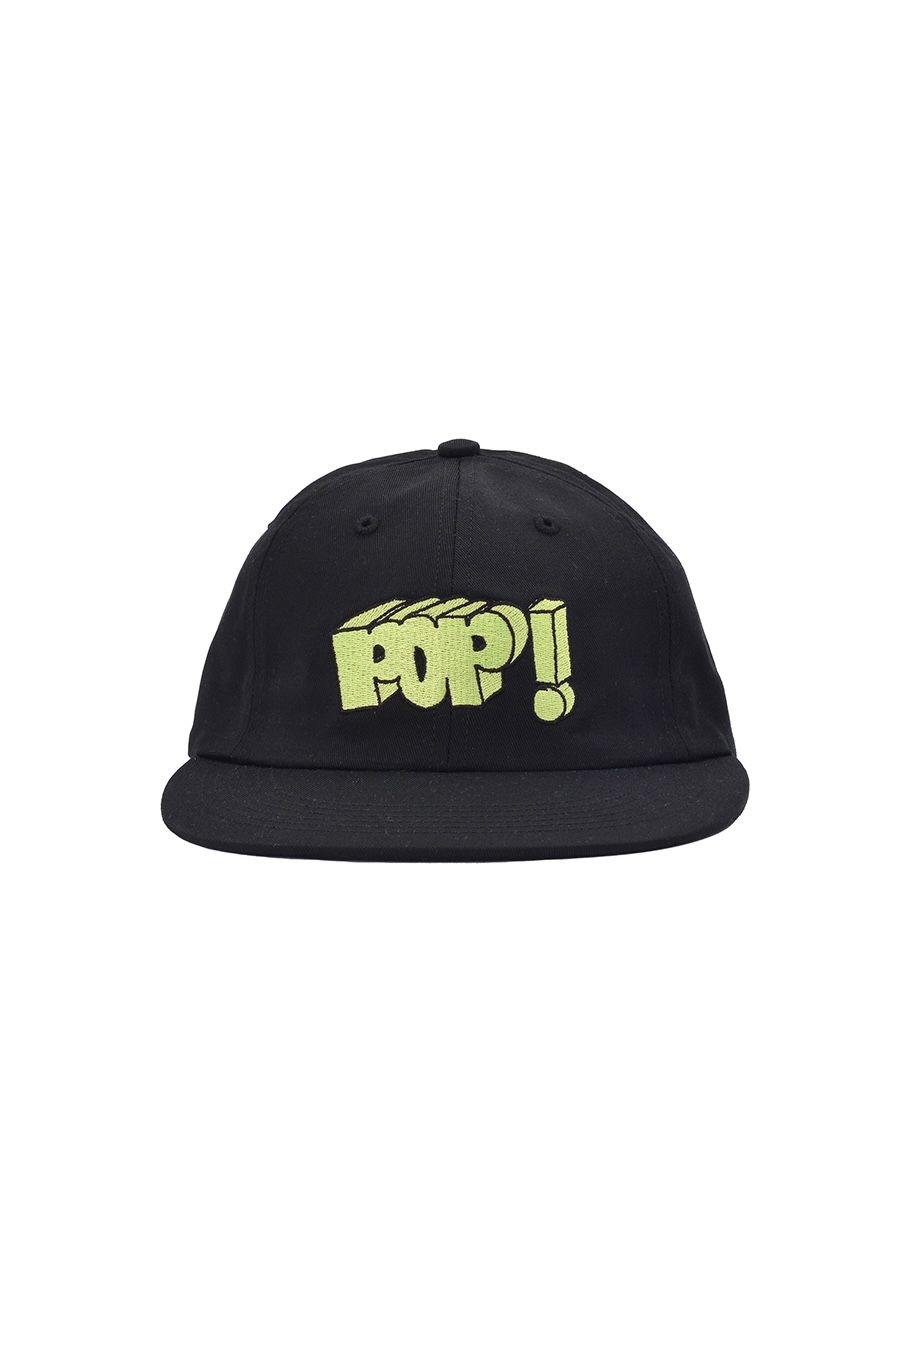 Pop Trading Company - right yeah sixpanel hat -black- 23ss drop2